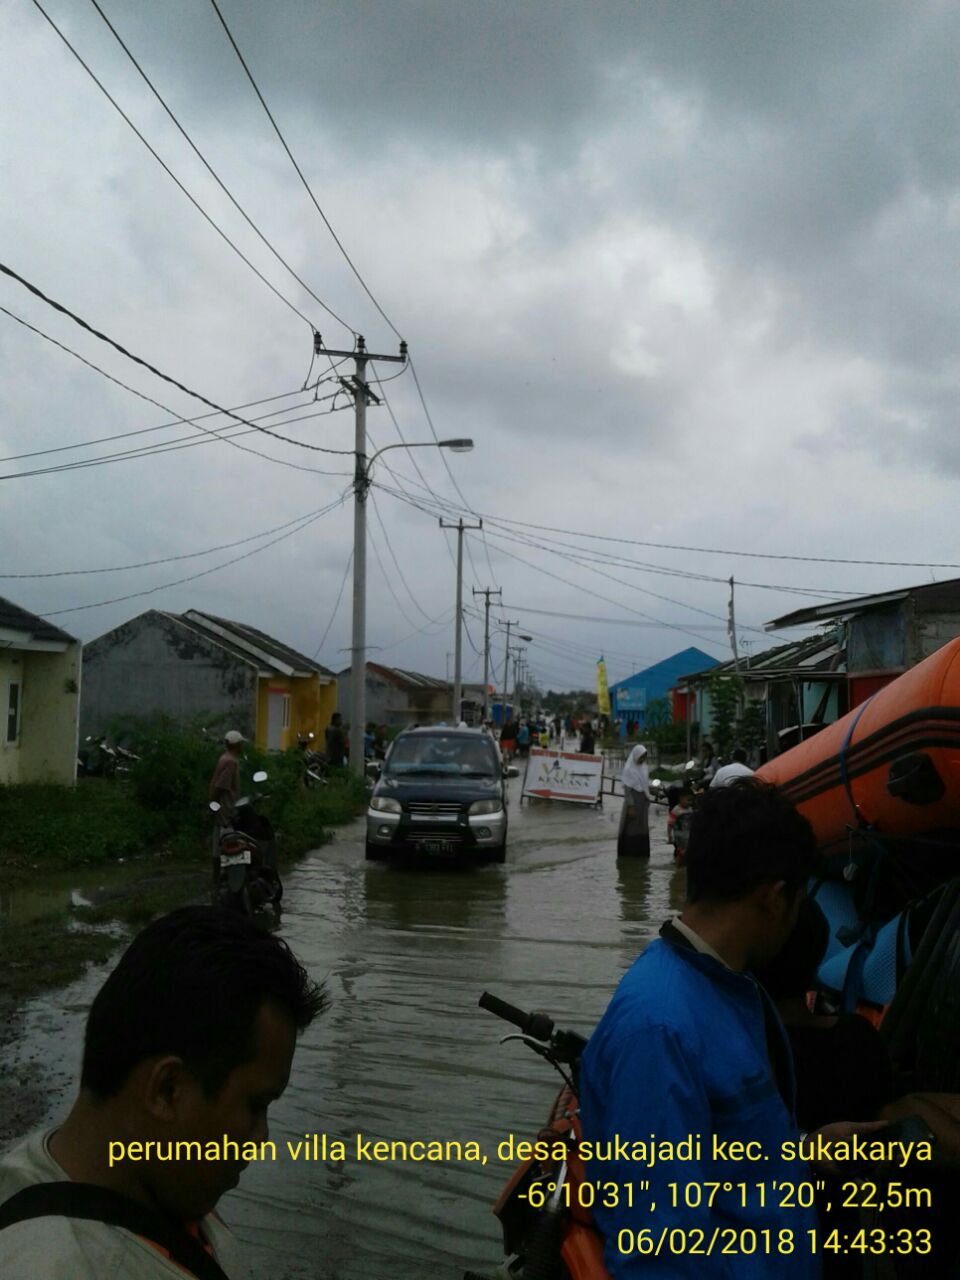 Banjir Menggenangi 900 Rumah Di Perumahan Villa Kencana Cikarang